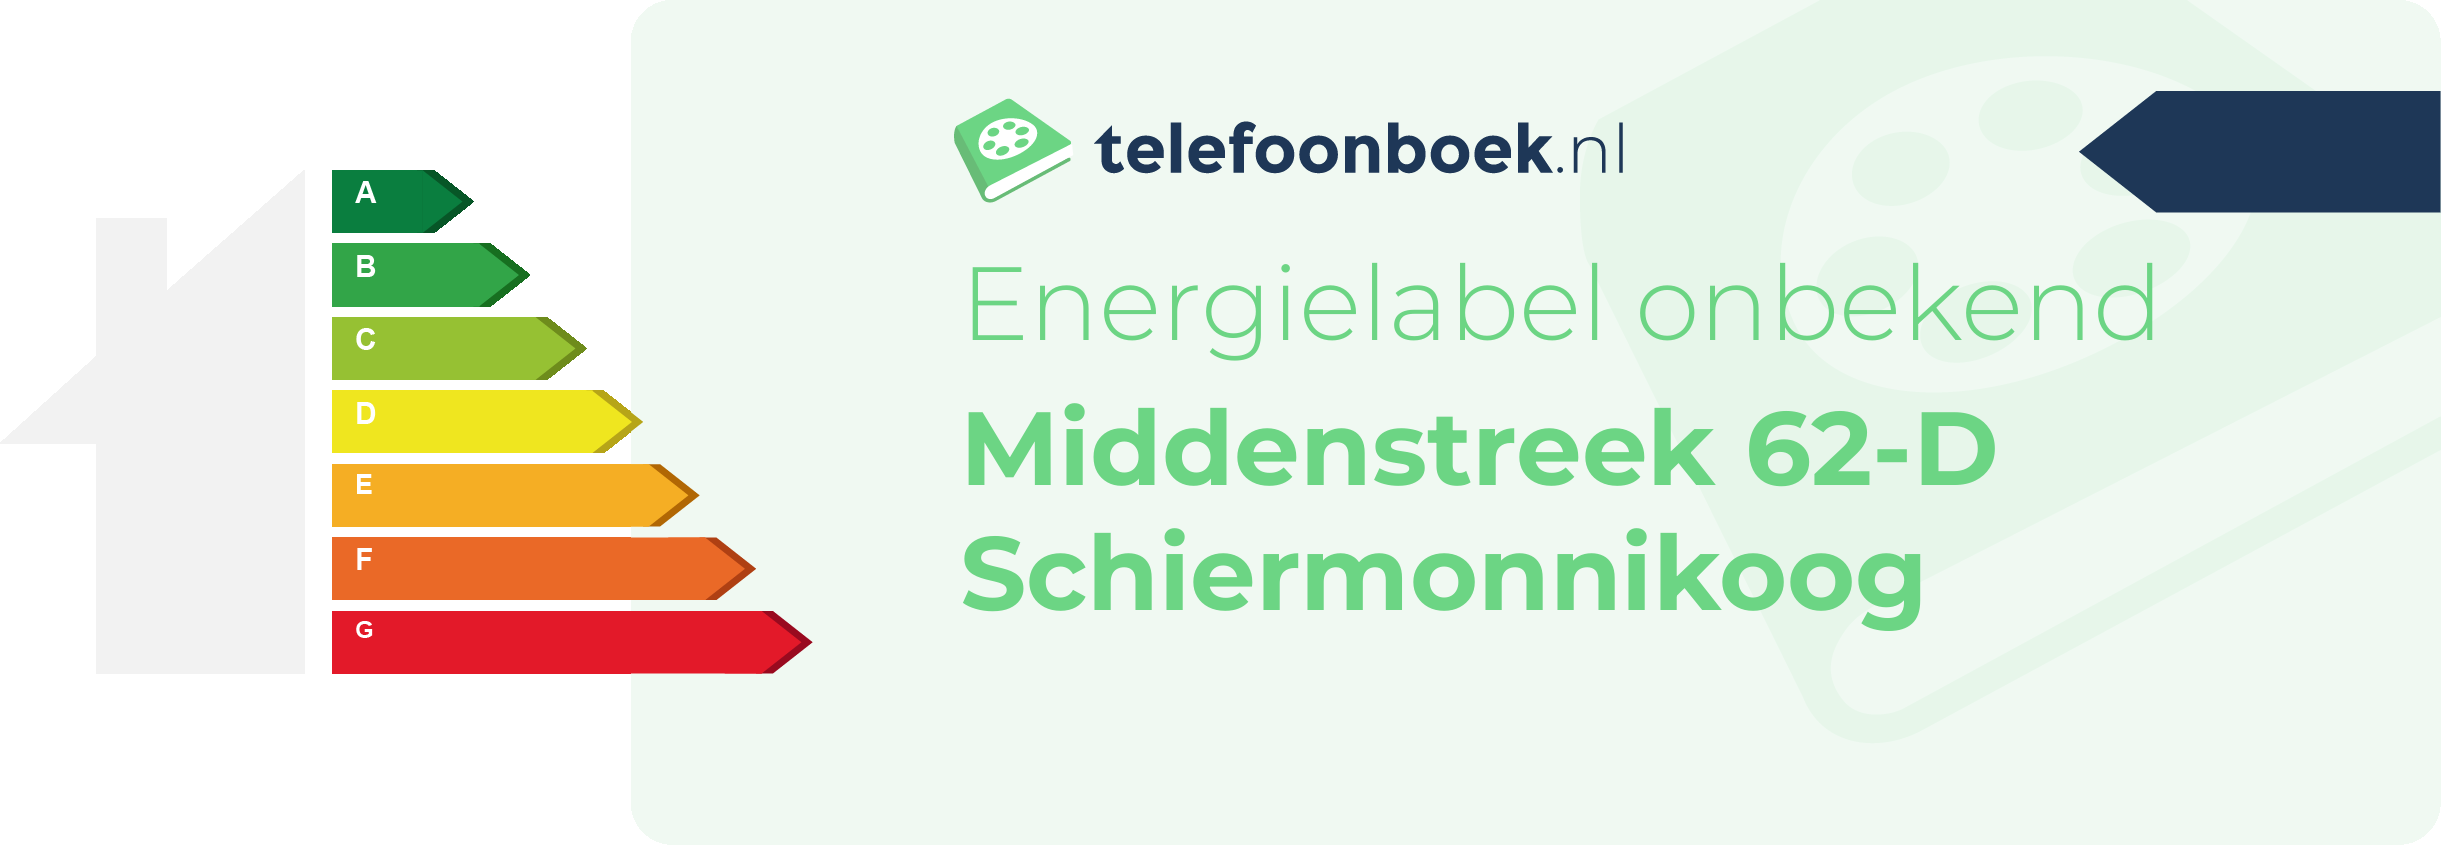 Energielabel Middenstreek 62-D Schiermonnikoog